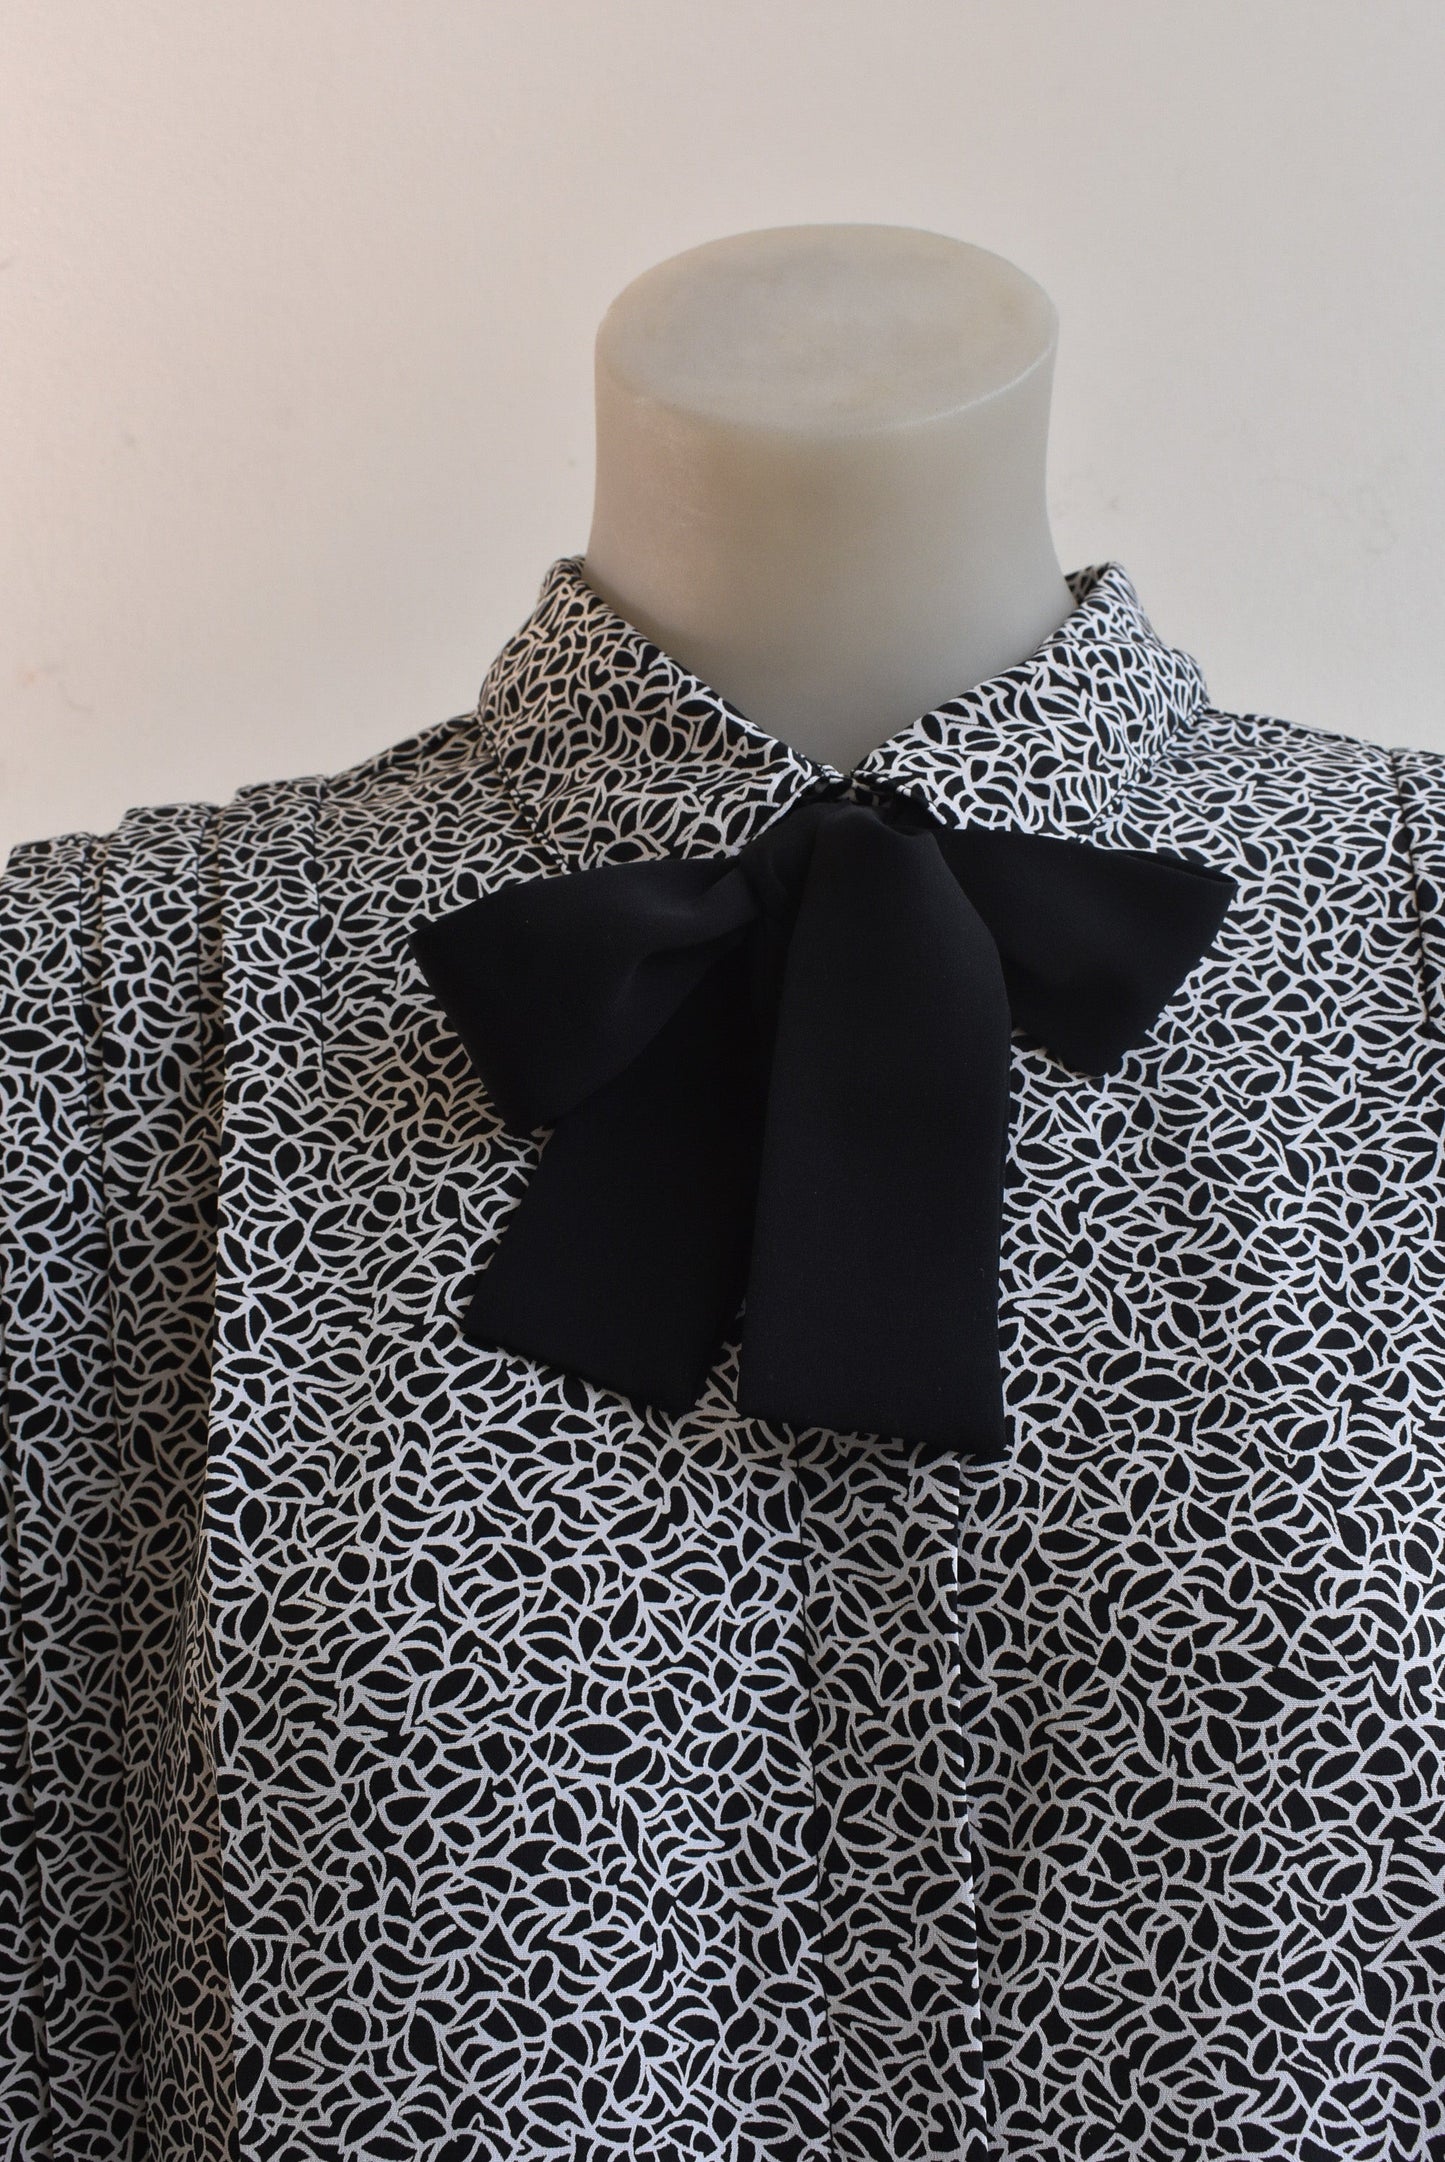 Retro 80s peplum blouse (size 18)